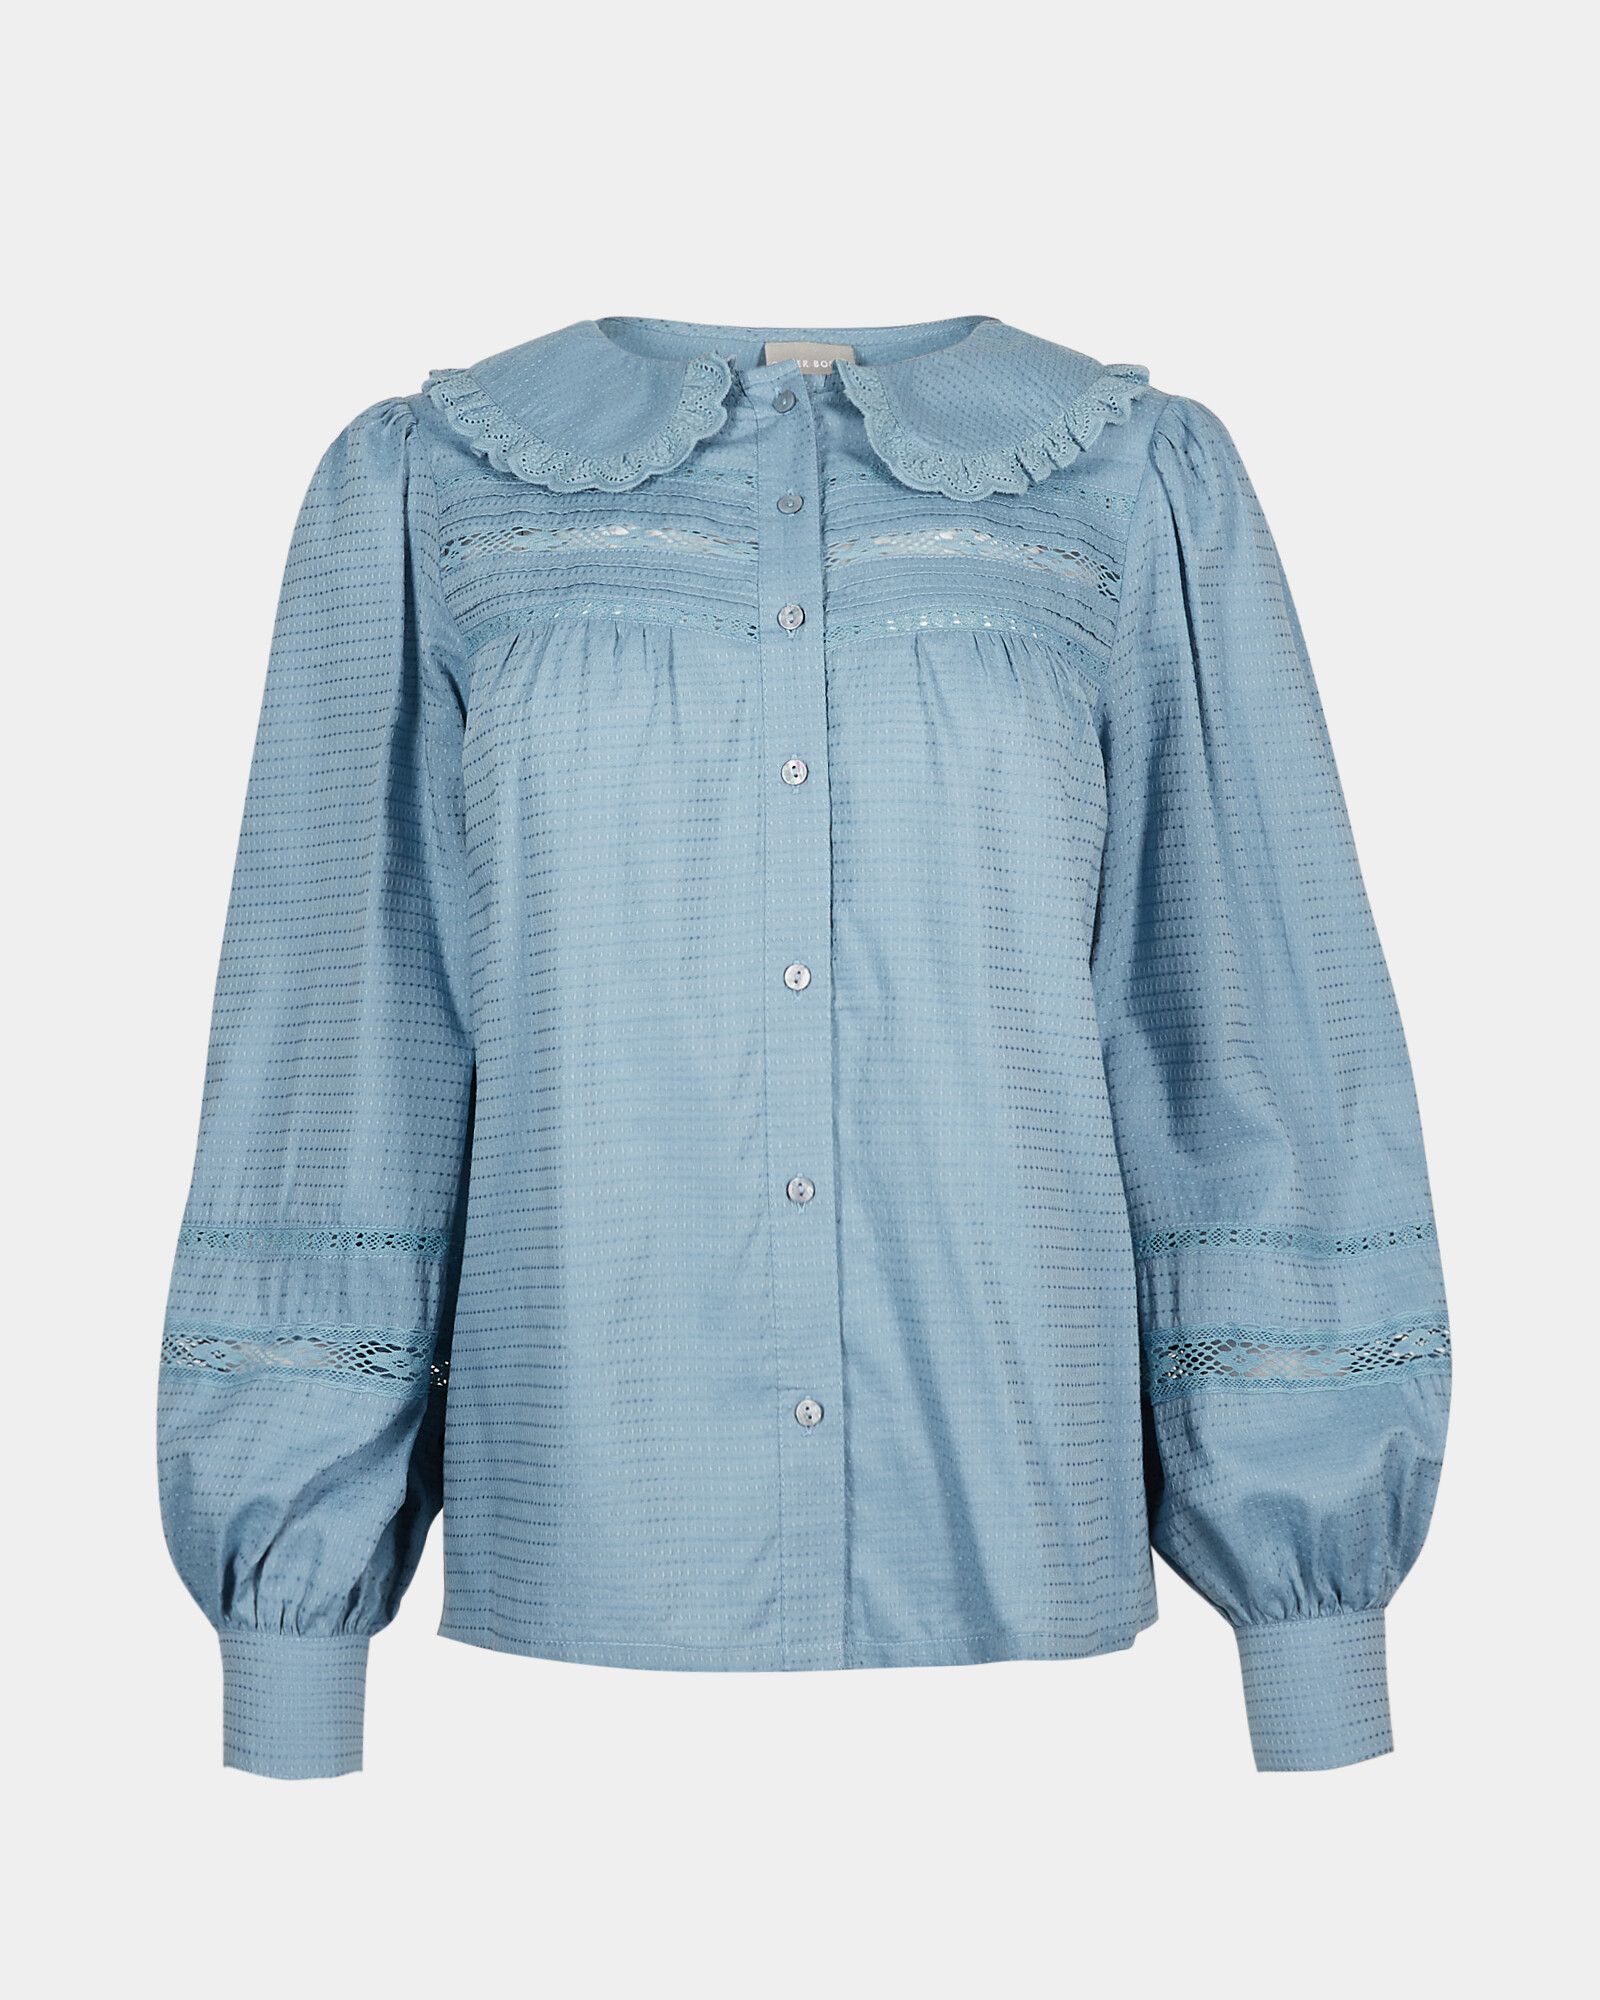 Lace Detail & Frill Collar Blue Shirt | Oliver Bonas